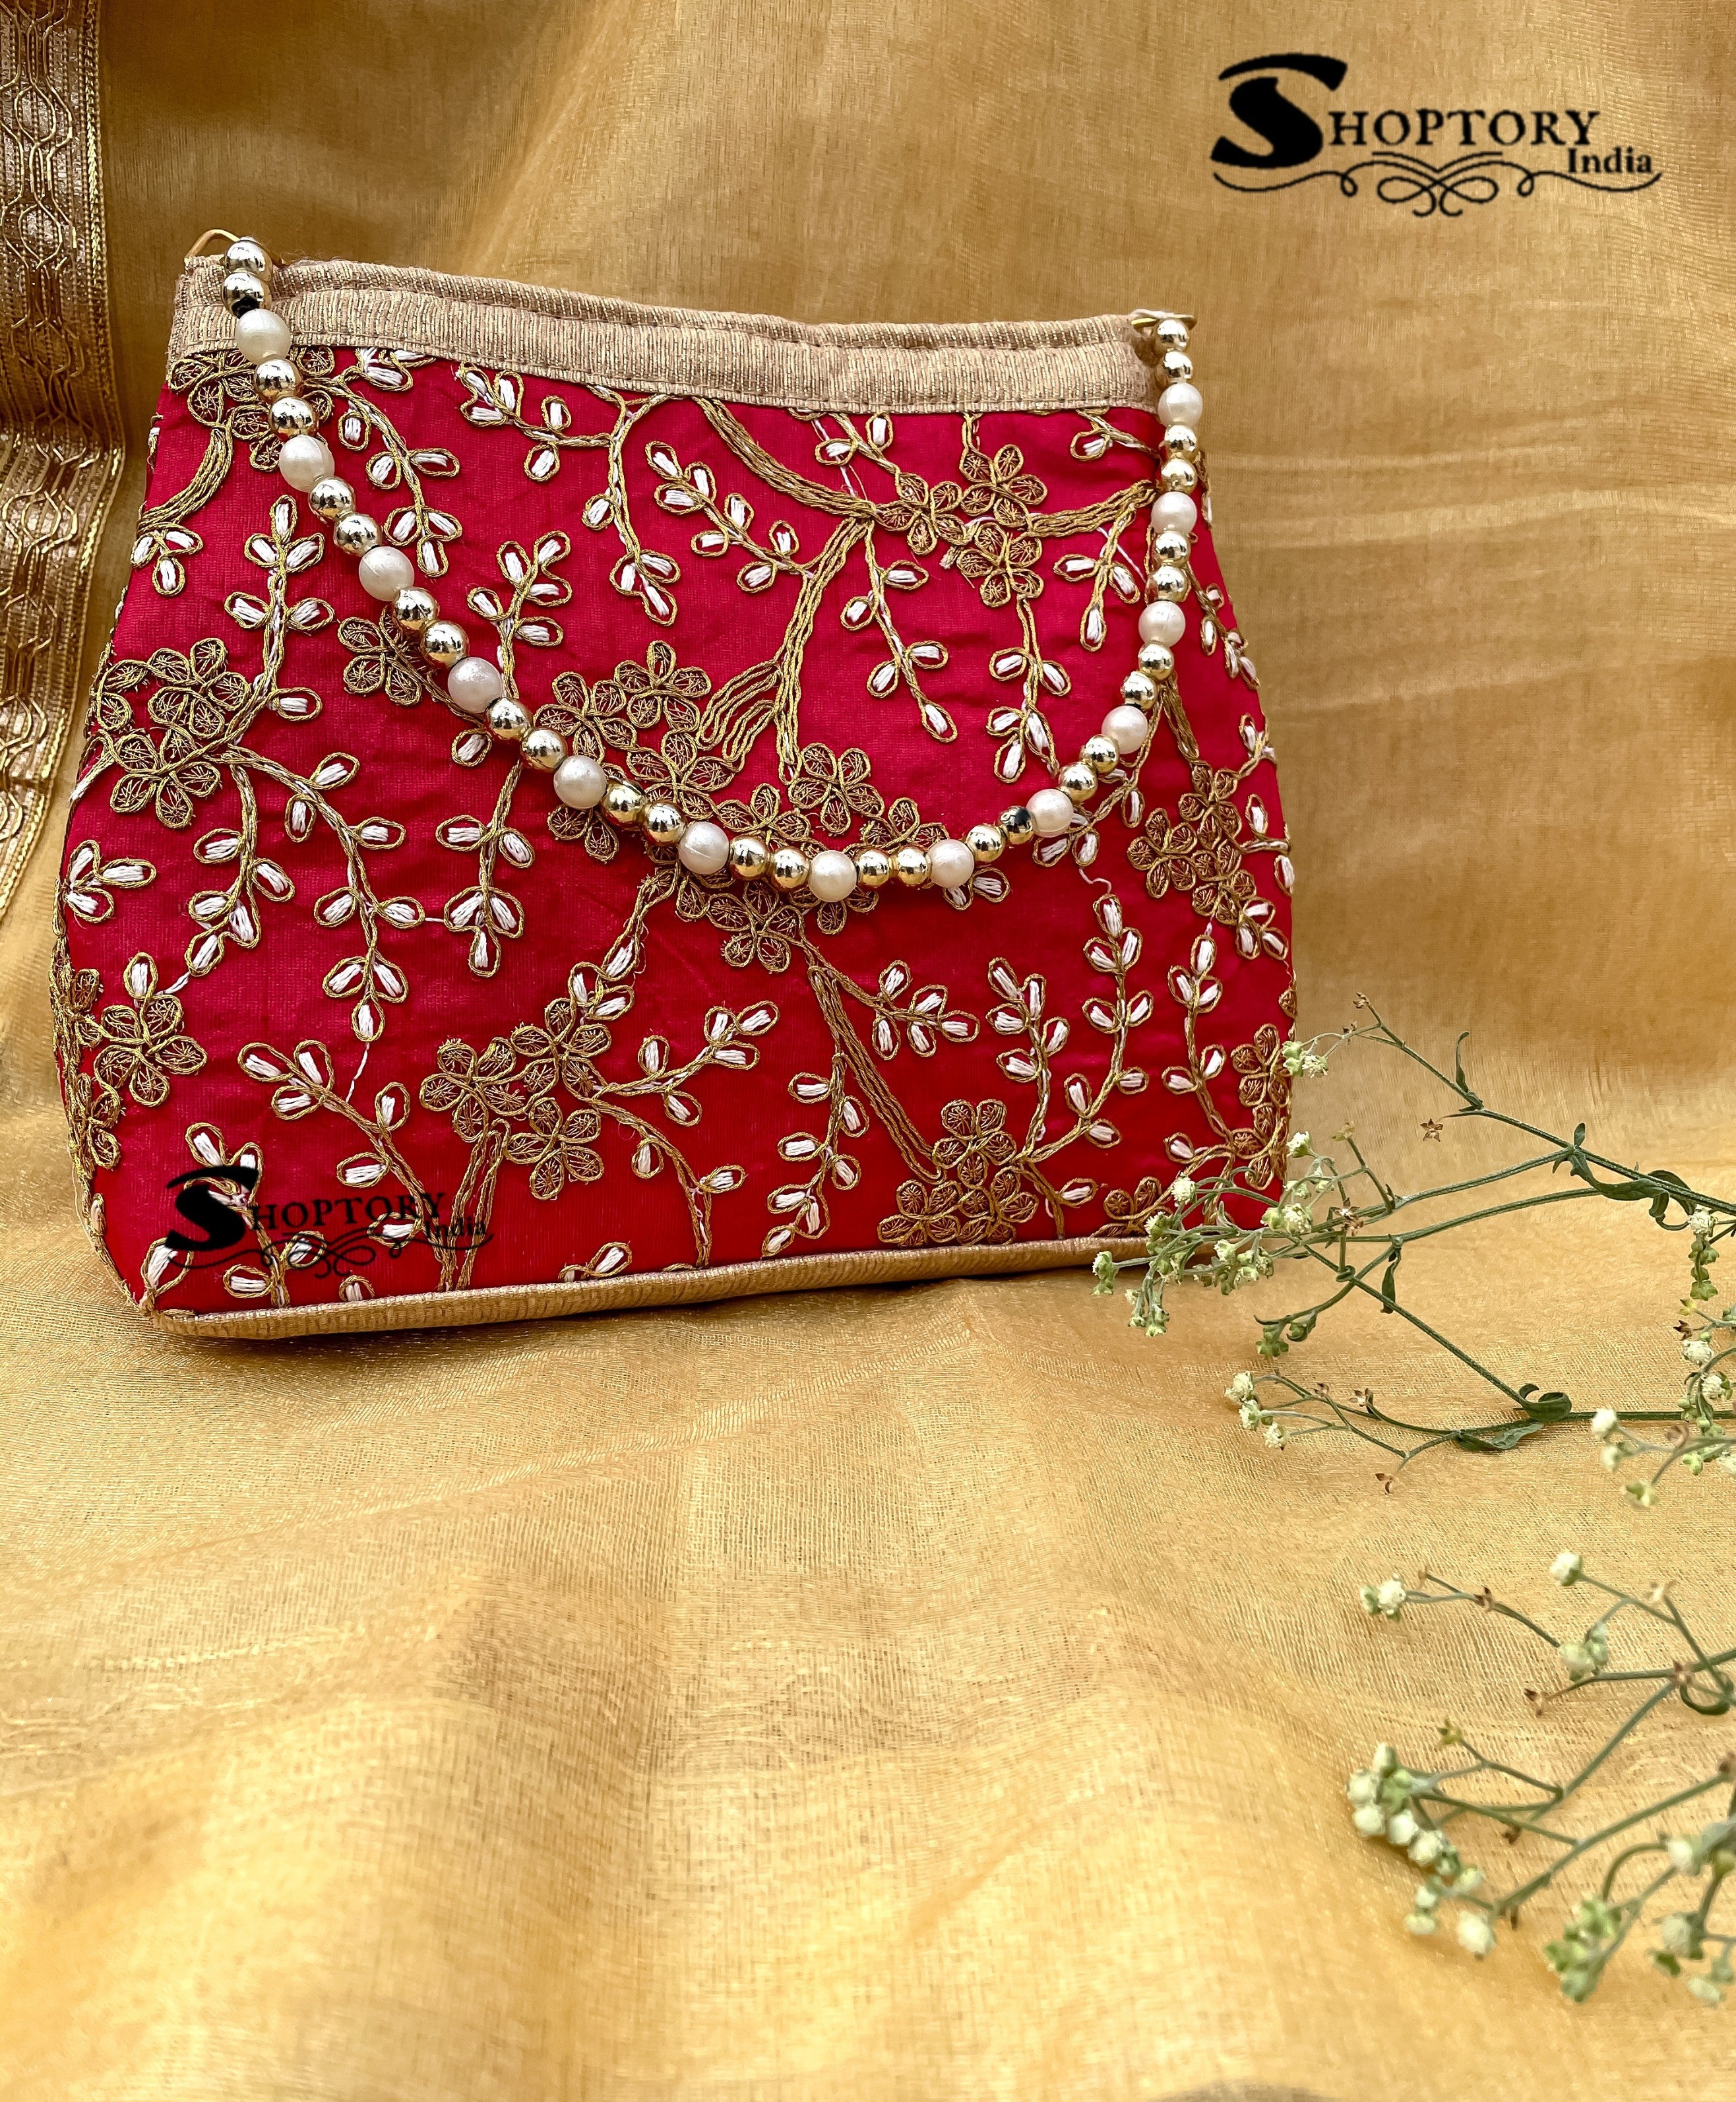 HPT DIAMOND PRINT RED CLUTCH BAG FOR GIRLS : Amazon.in: Fashion